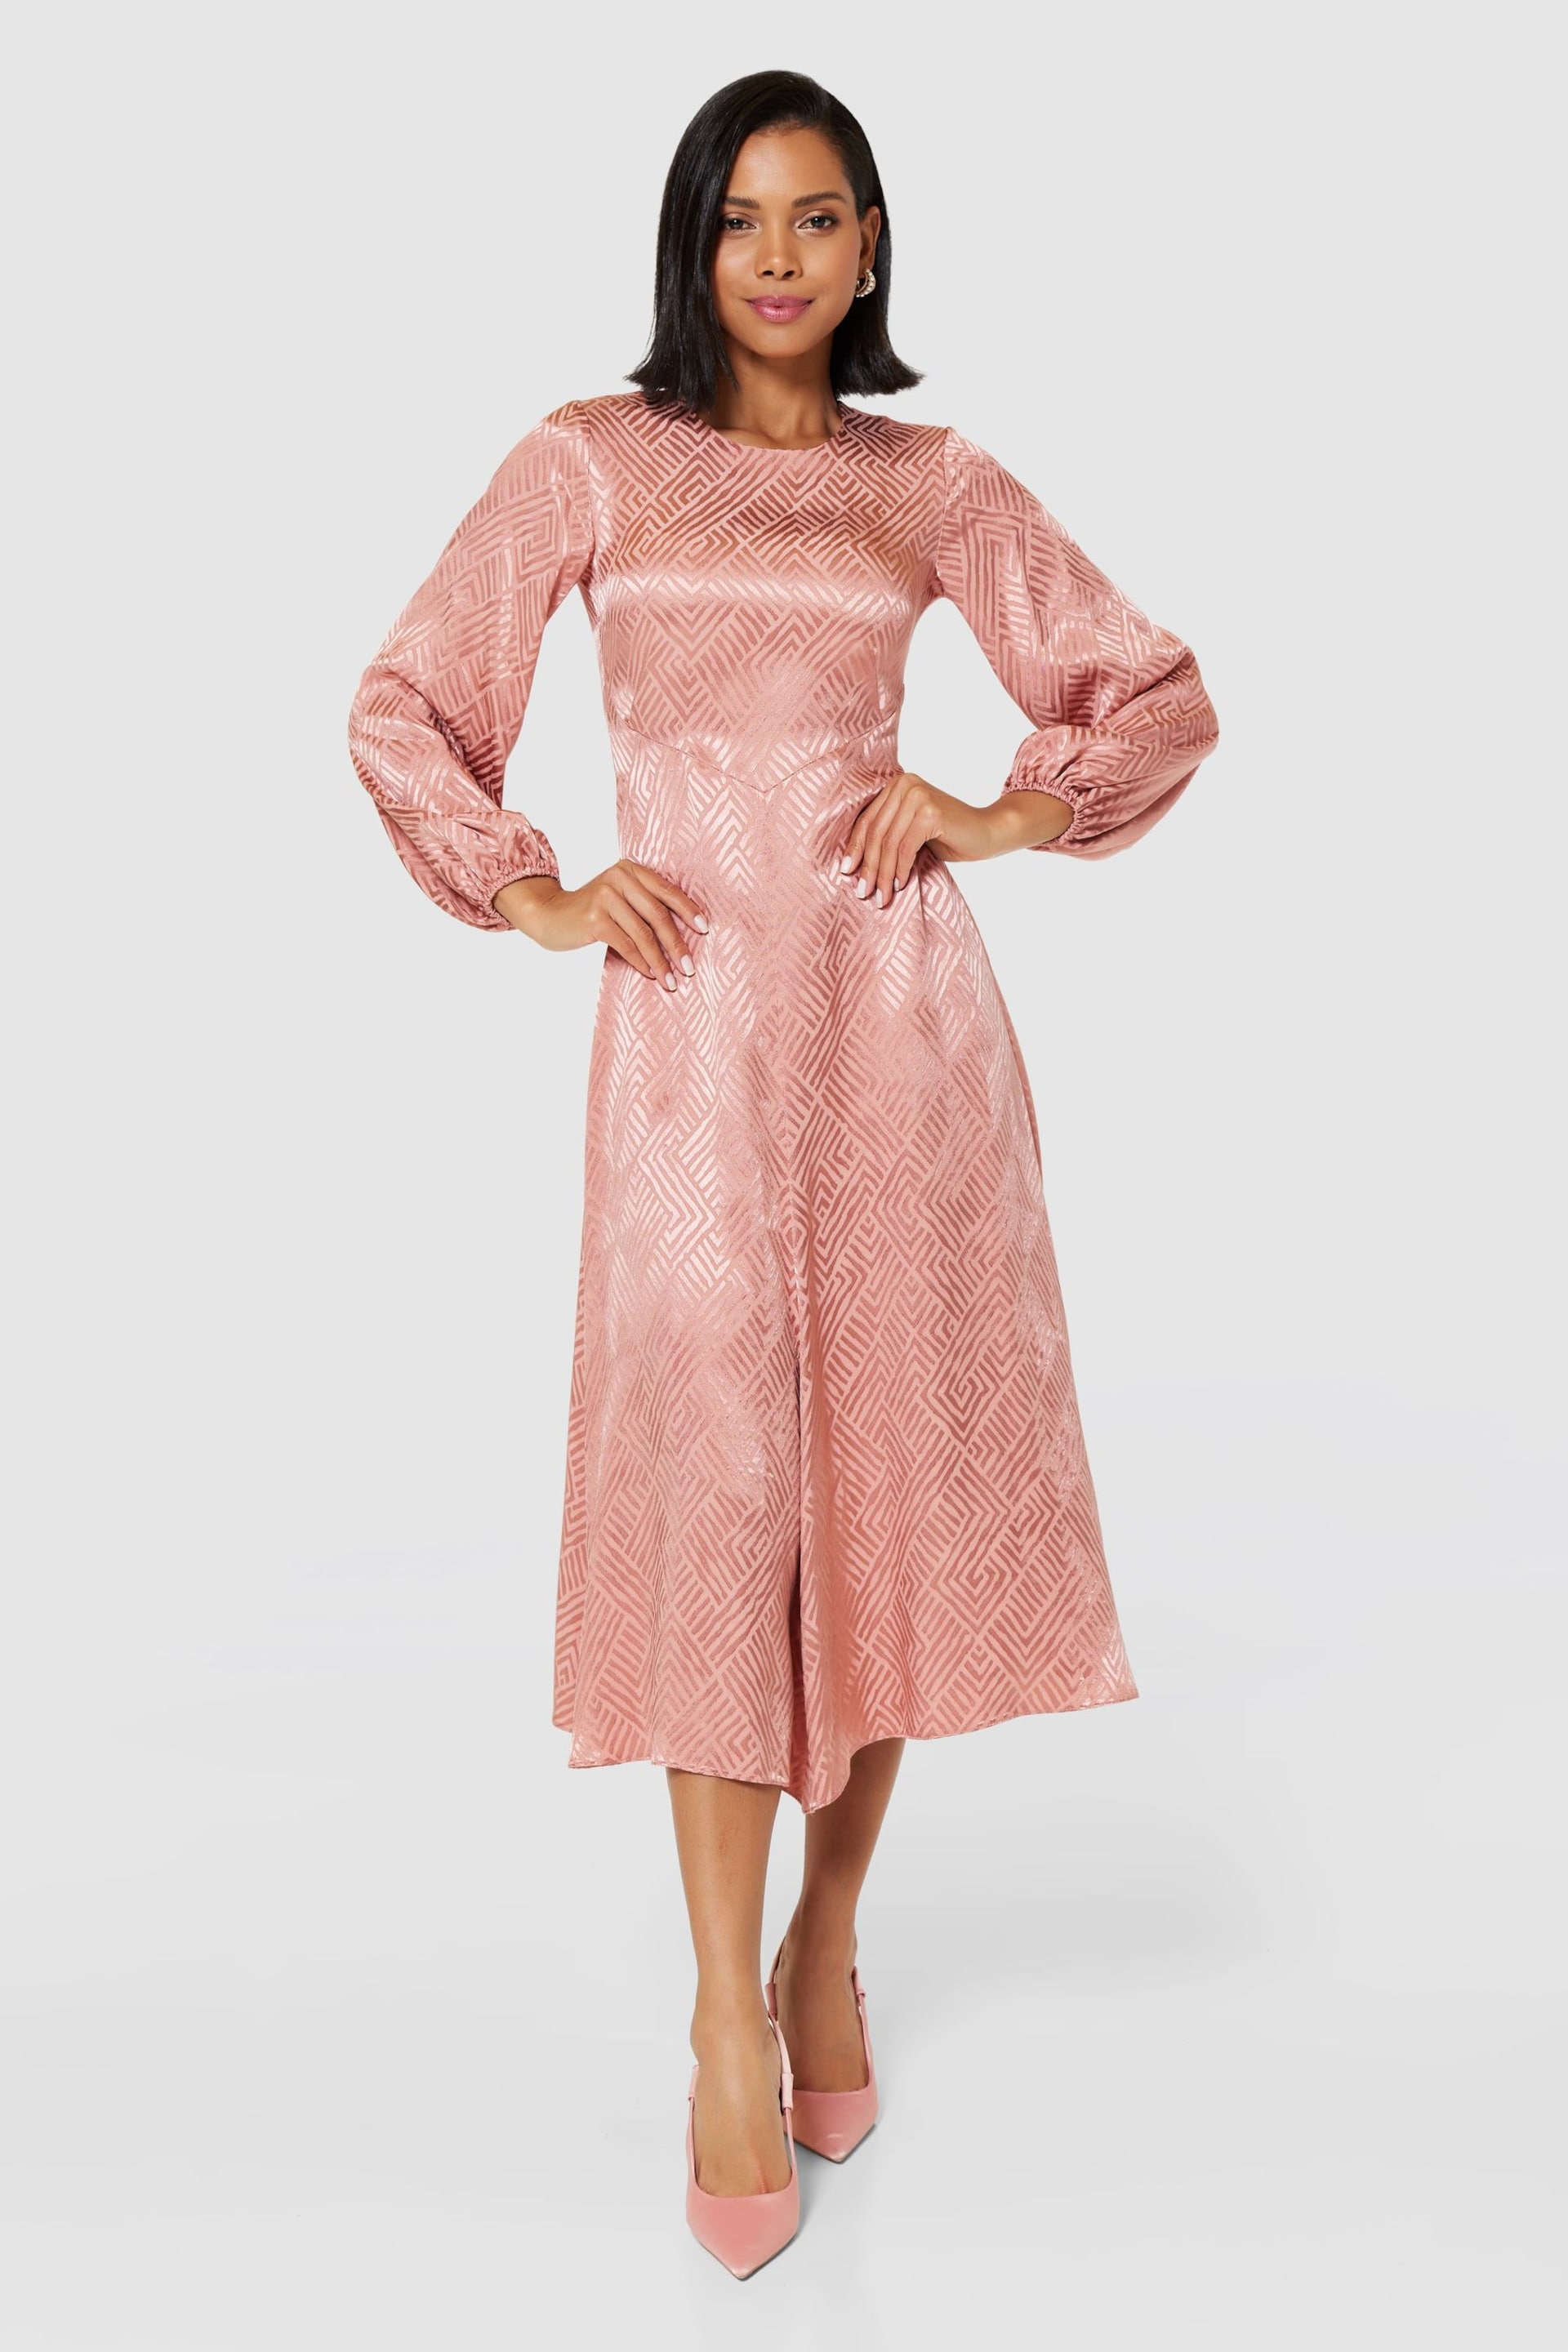 Closet London Pink Midi A-Line Dress - Image 1 of 5